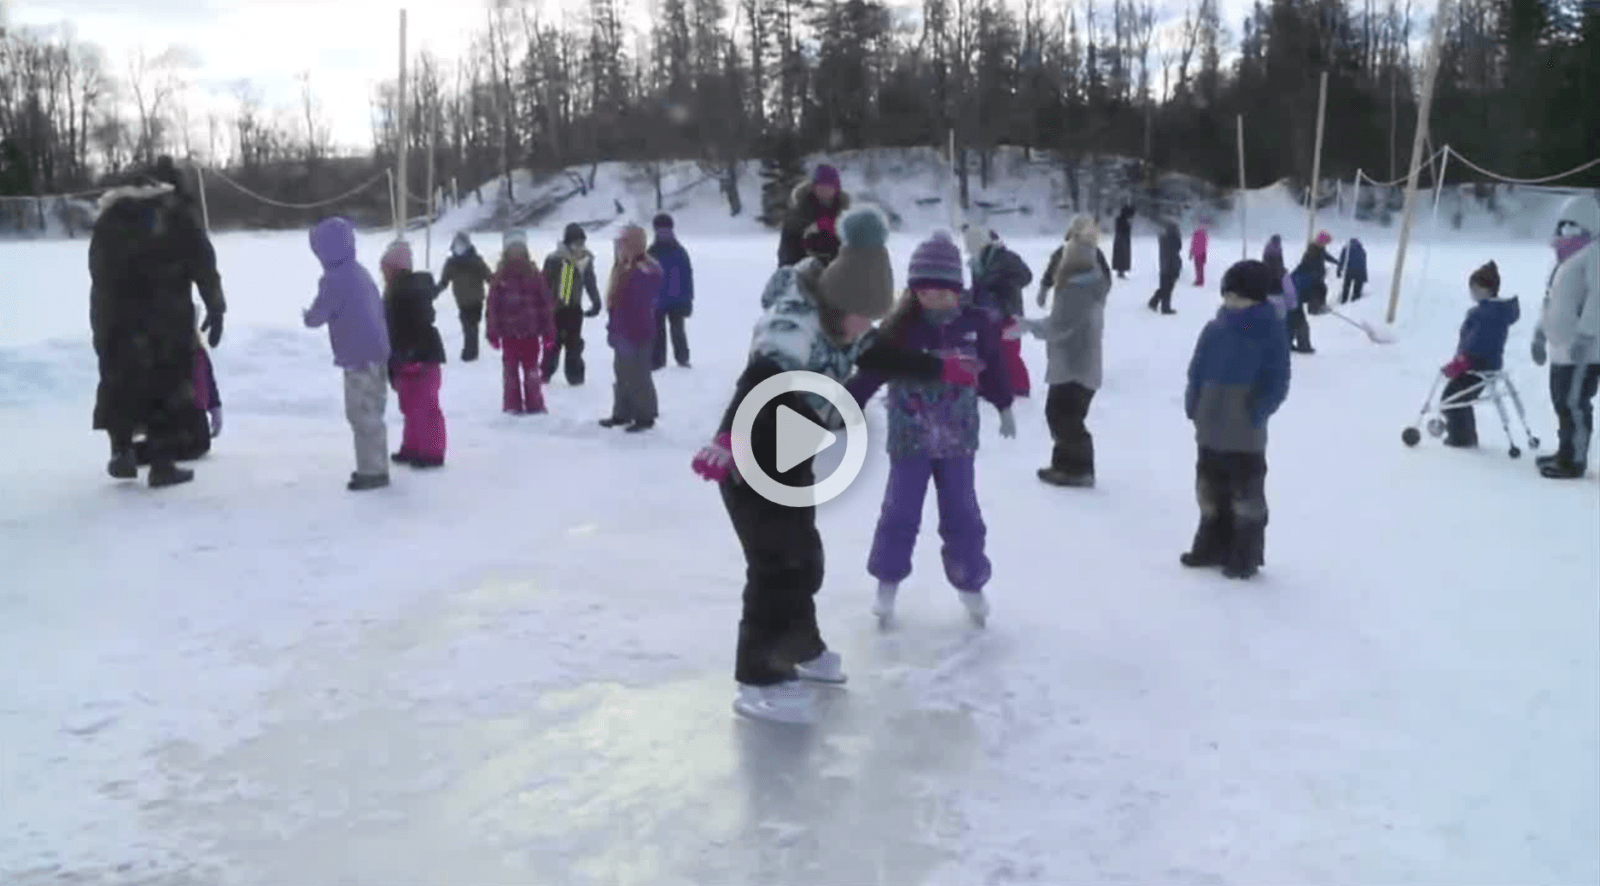 Pine Street Students enjoy WinterKids Winter Games